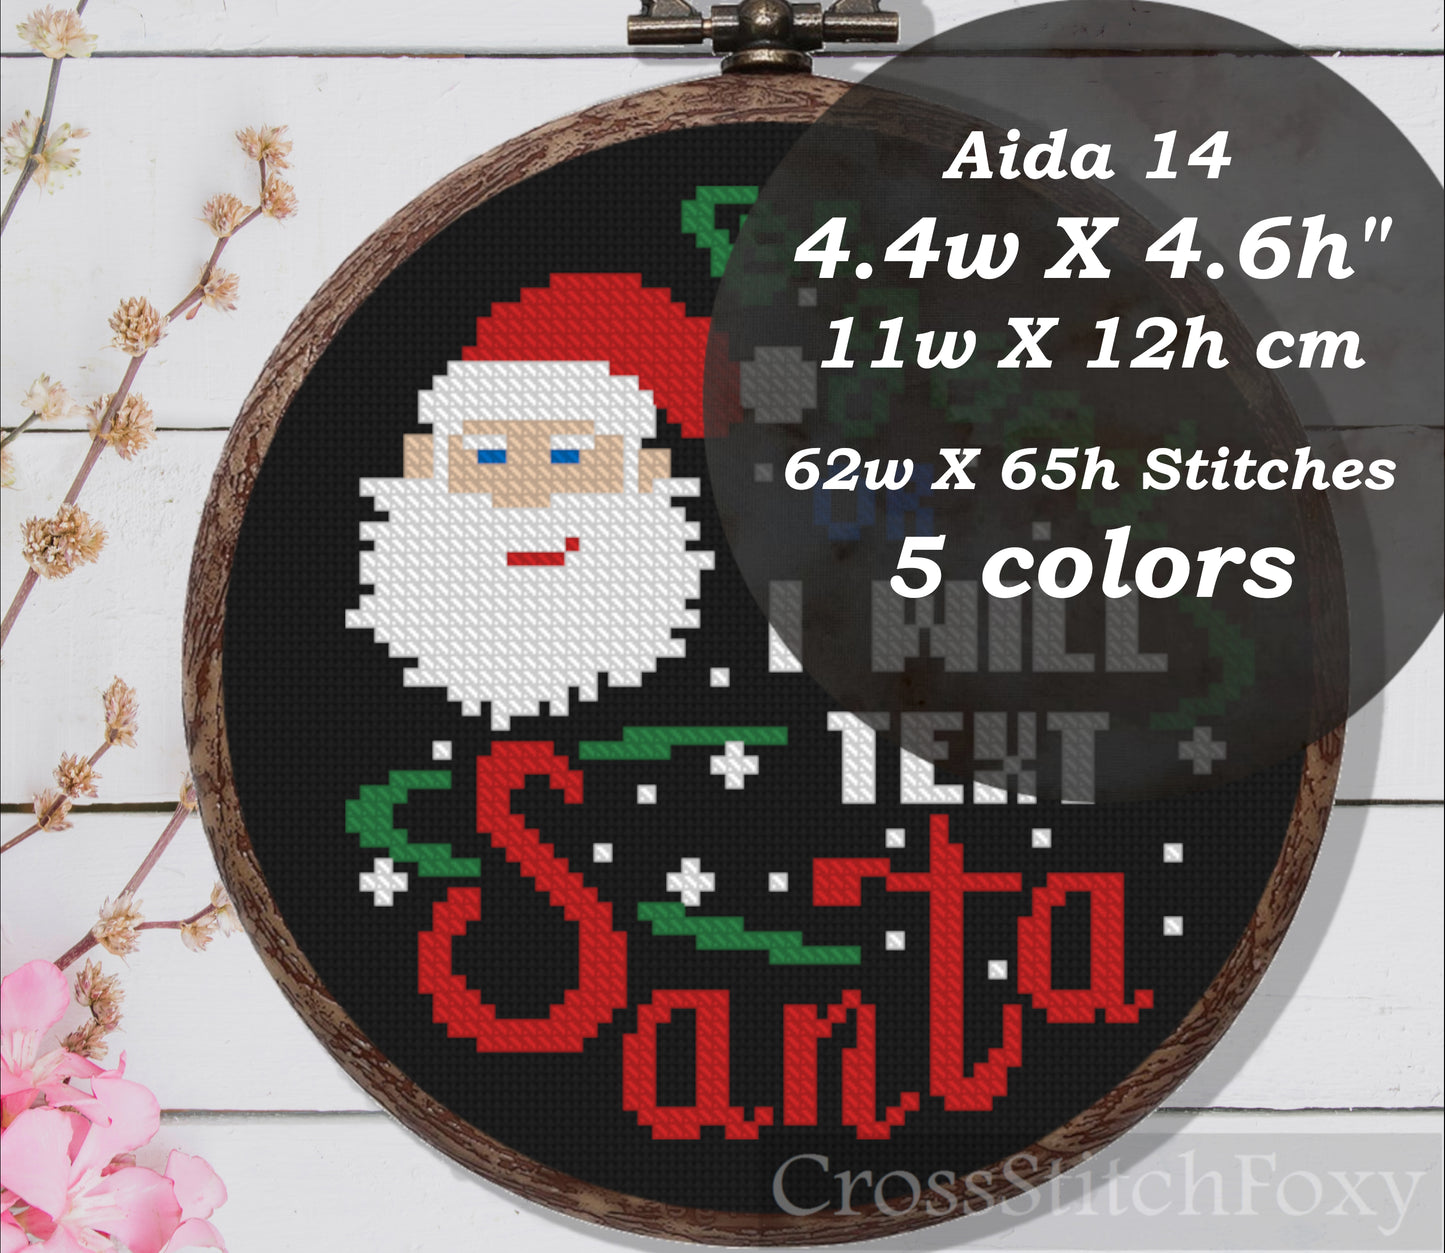 Small funny Christmas cross stitch pattern